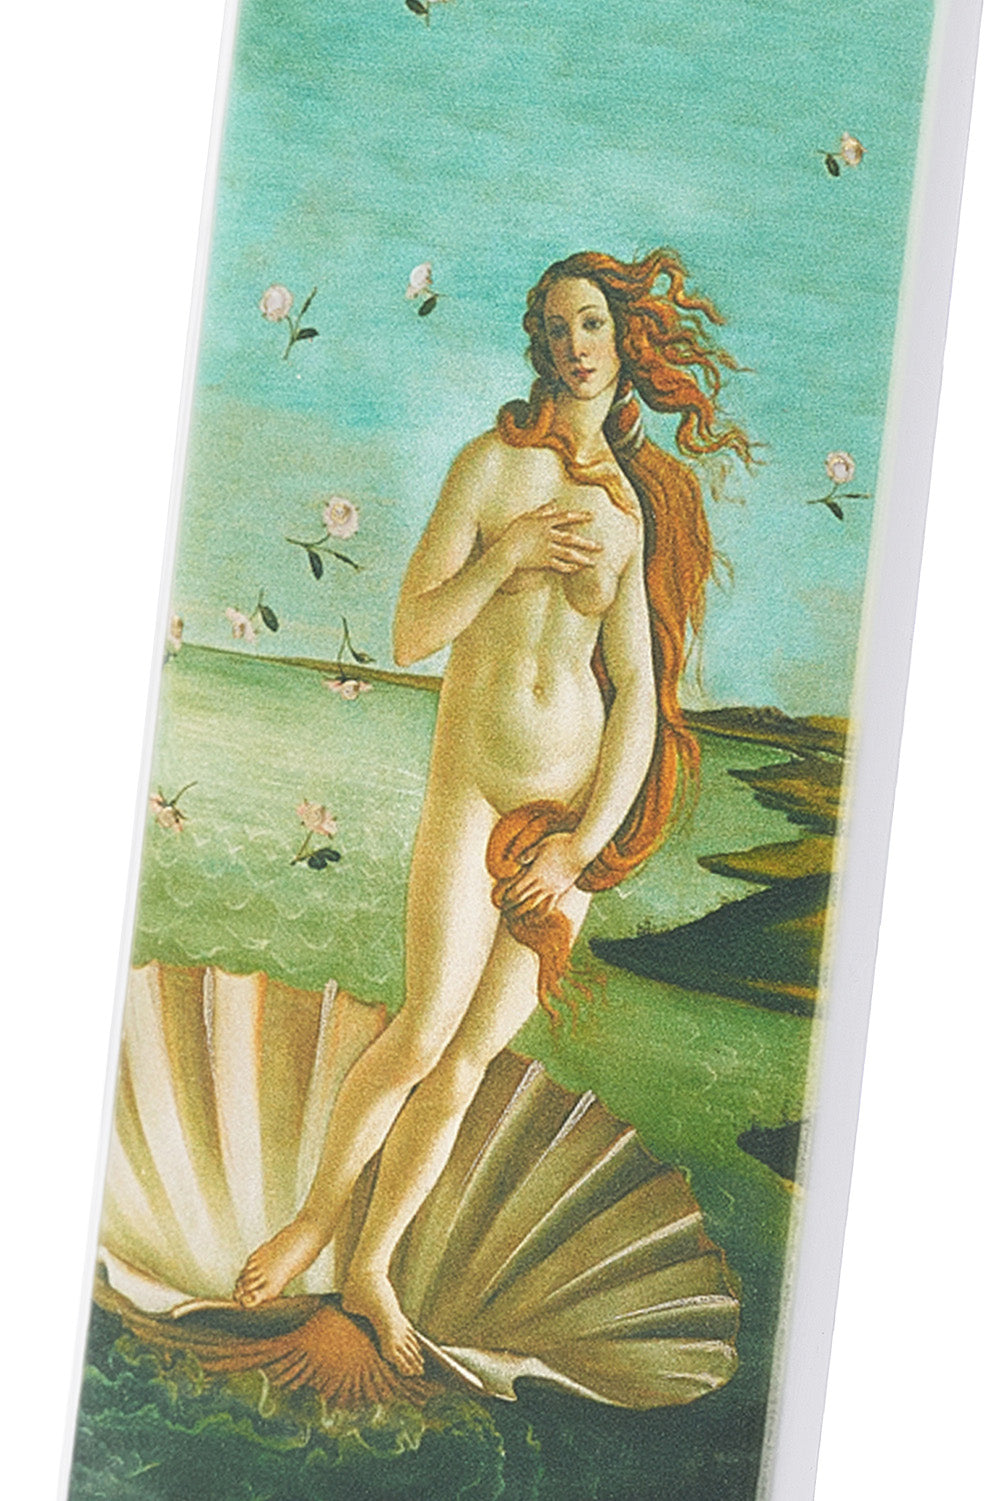 Sandro Botticelli - The Birth of Venus